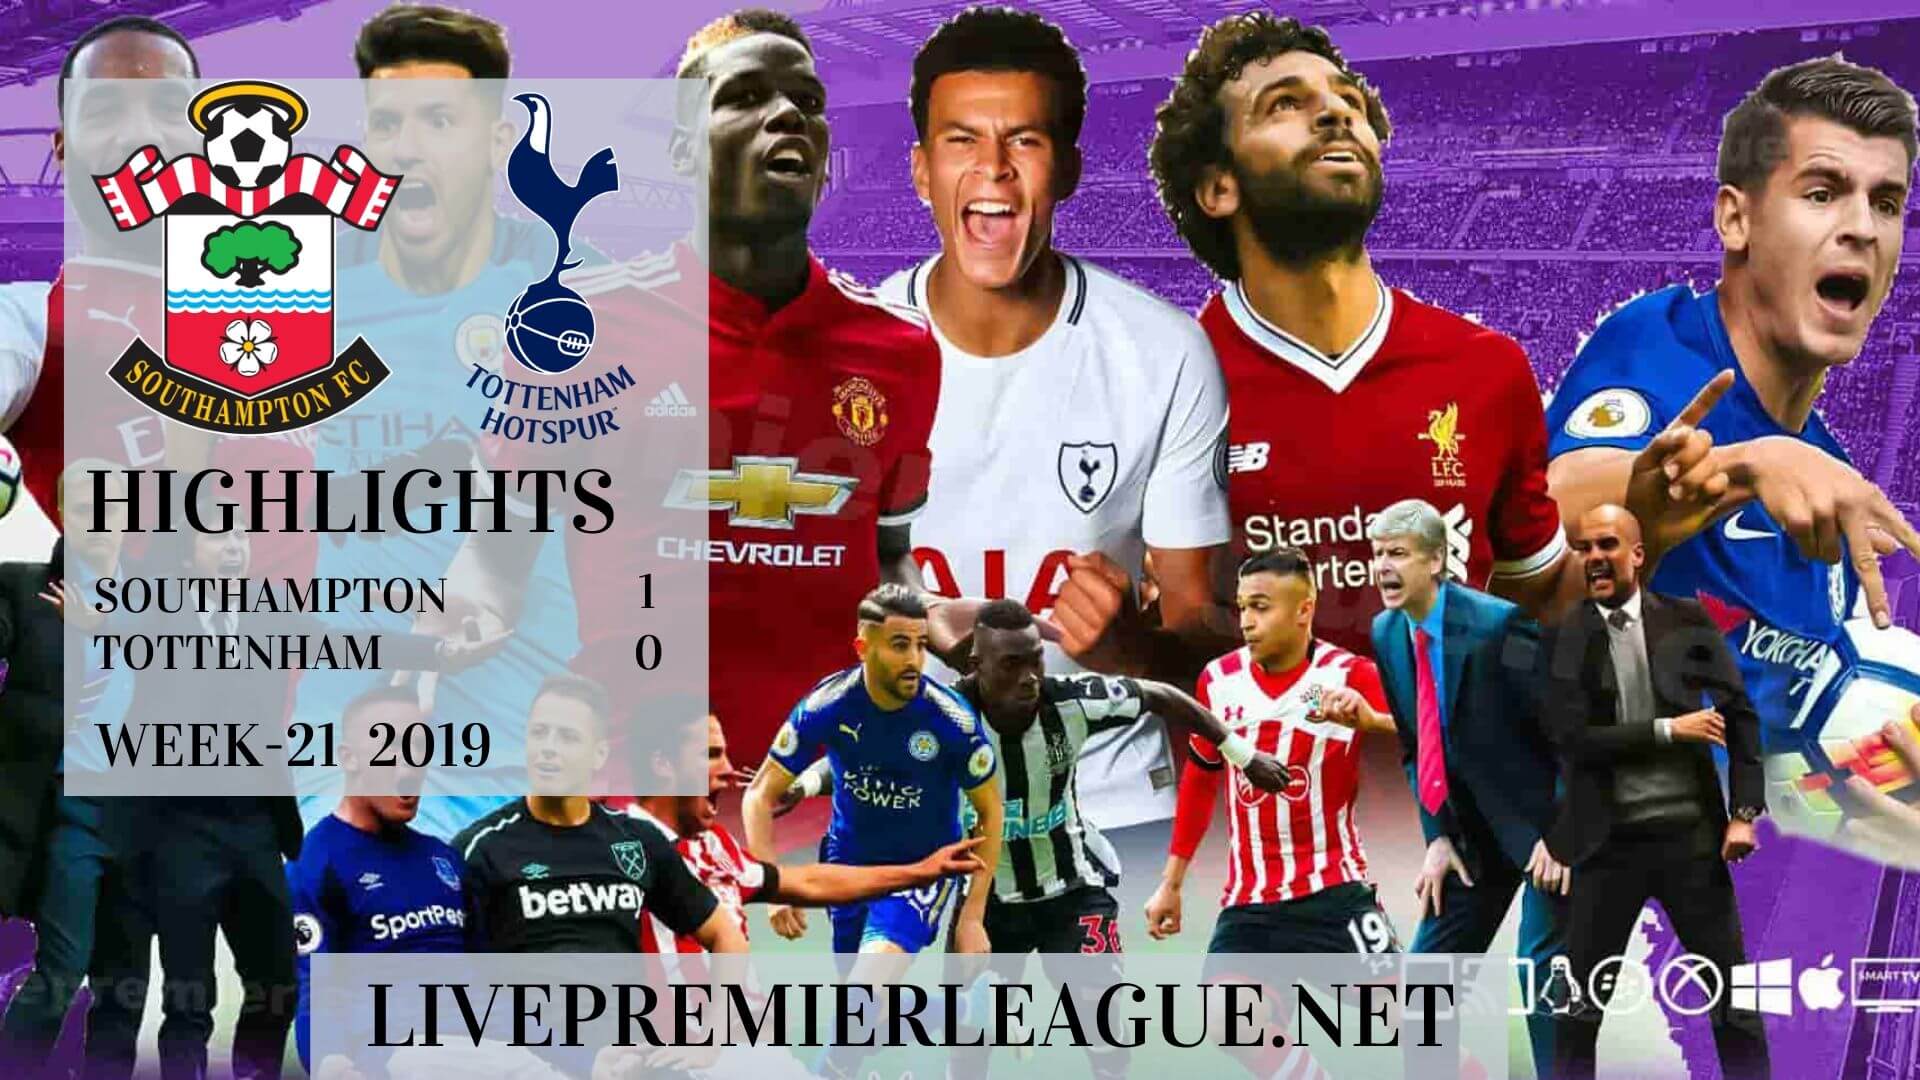 Southampton Vs Tottenham Highlights 2020 Week 21